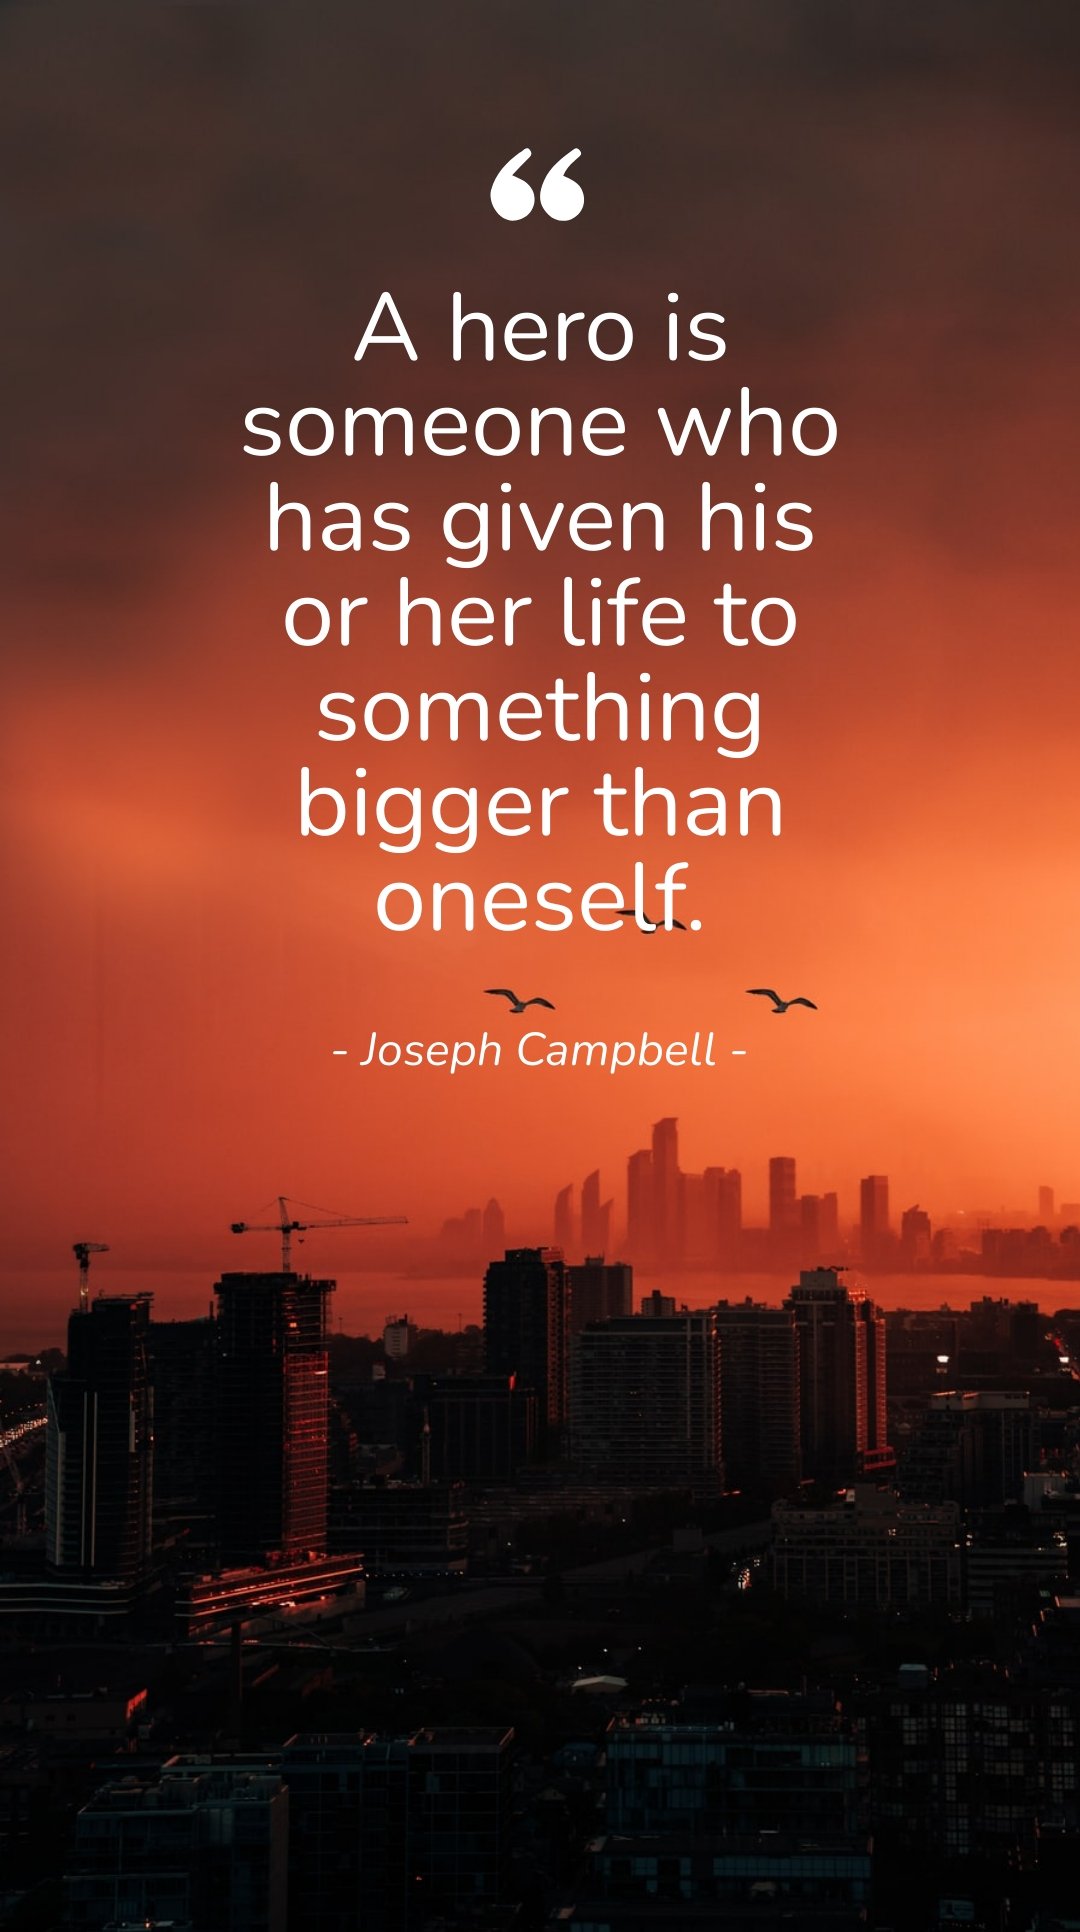 Joseph Campbell - 